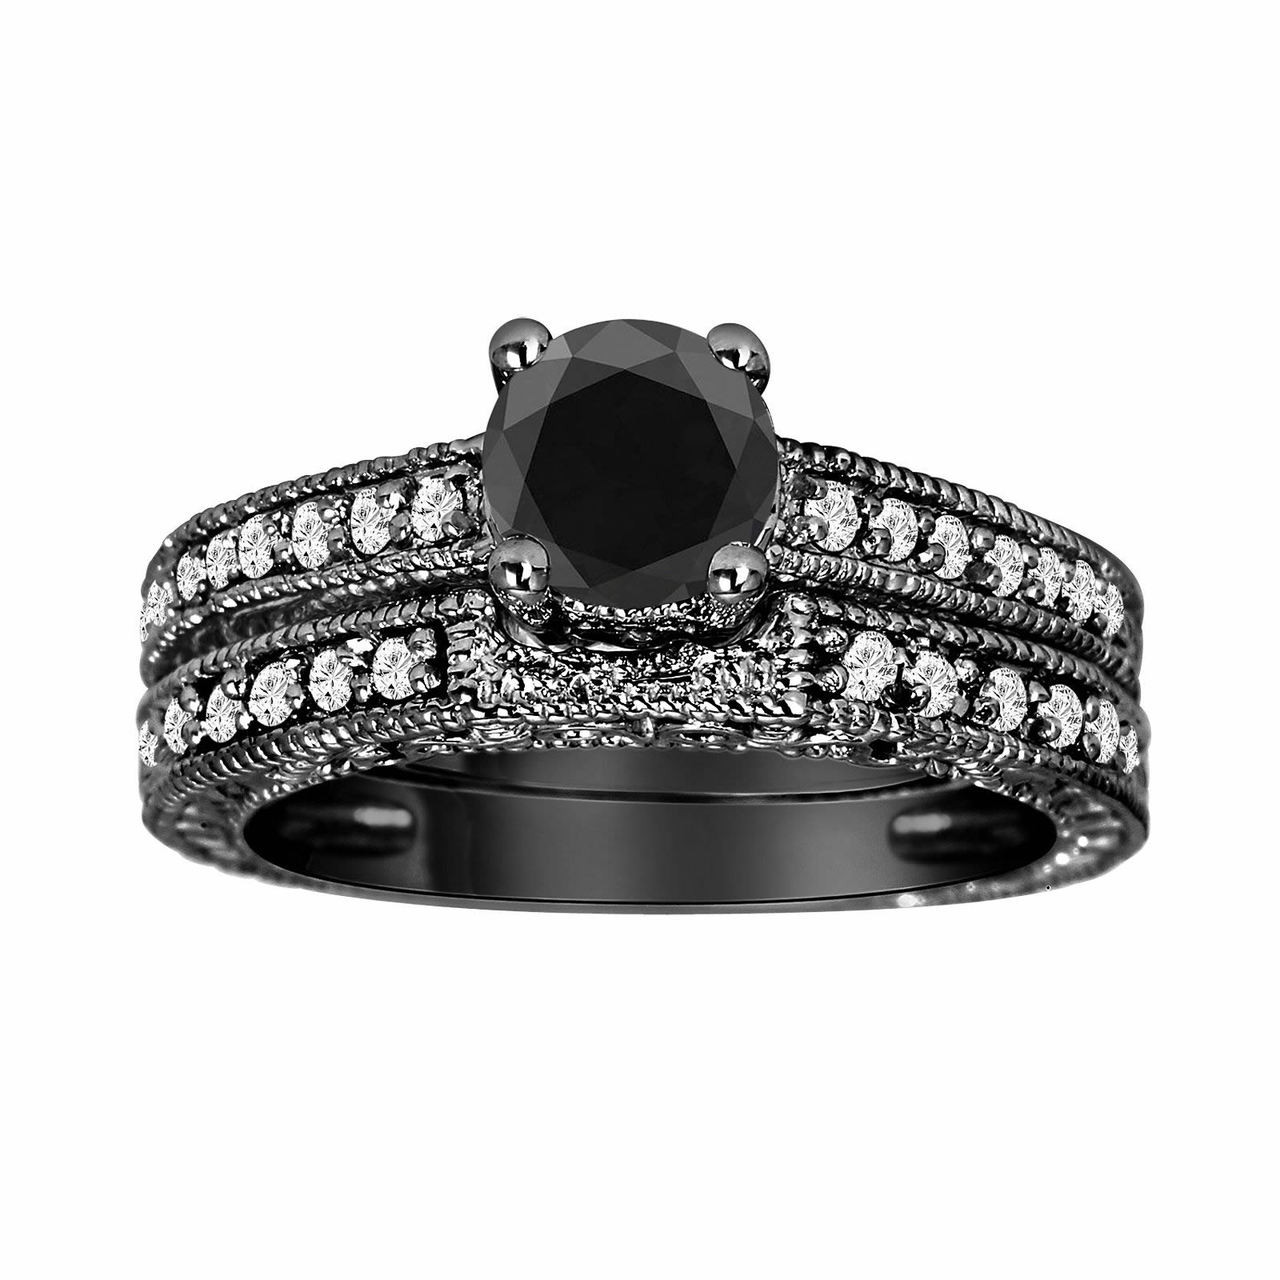 Vintage-Inspired Snake Ring With Black Diamond